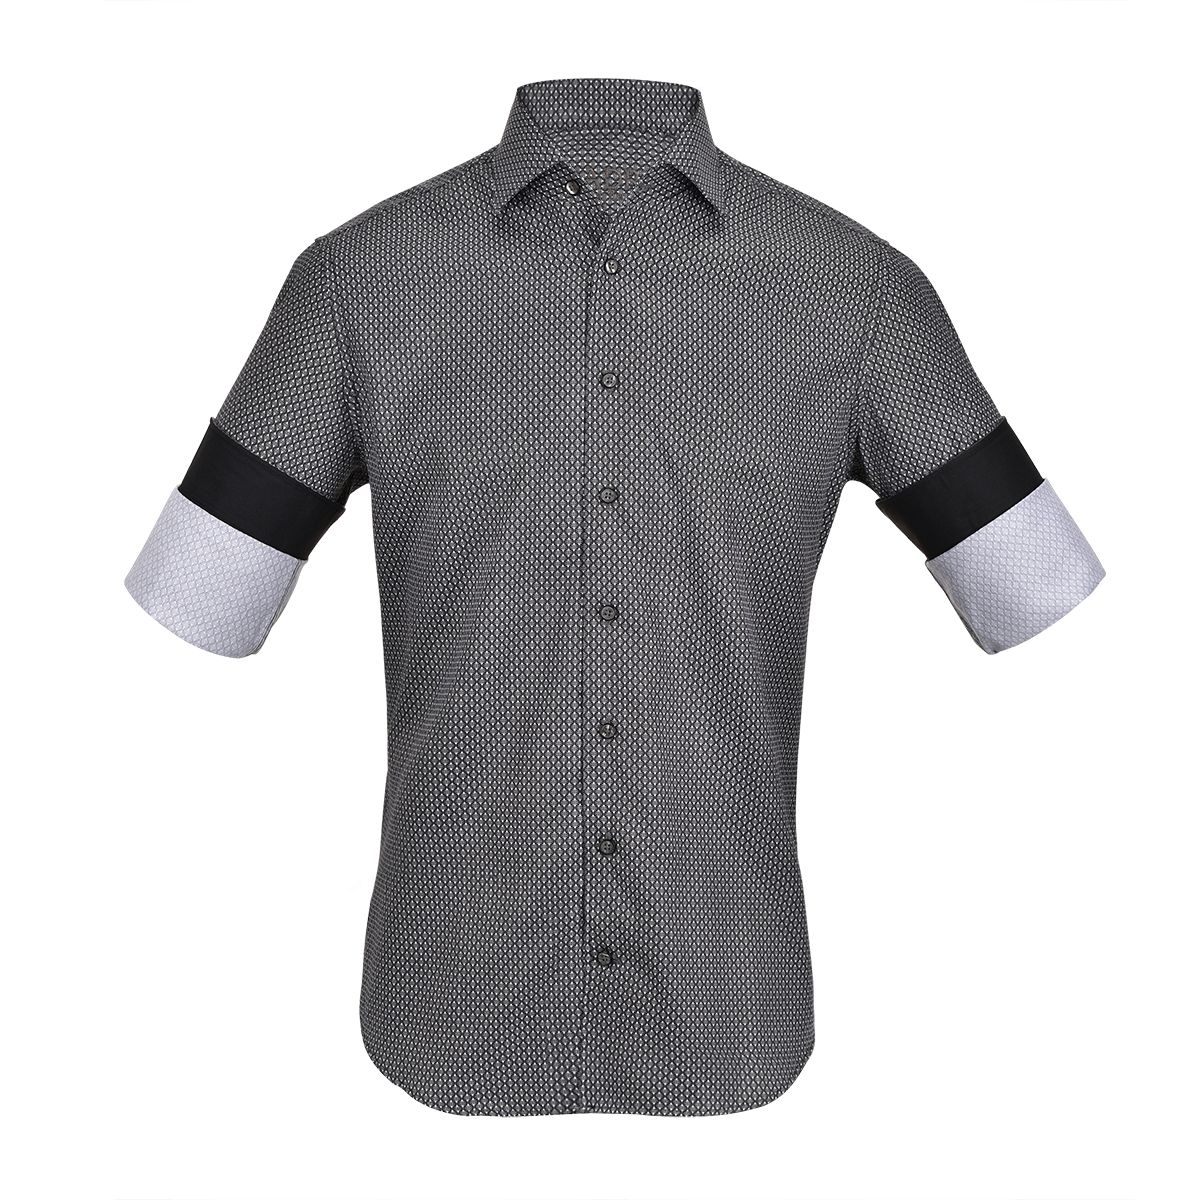 CMW555R - Cuadra black casual fashion cotton shirt for men-Kuet.us